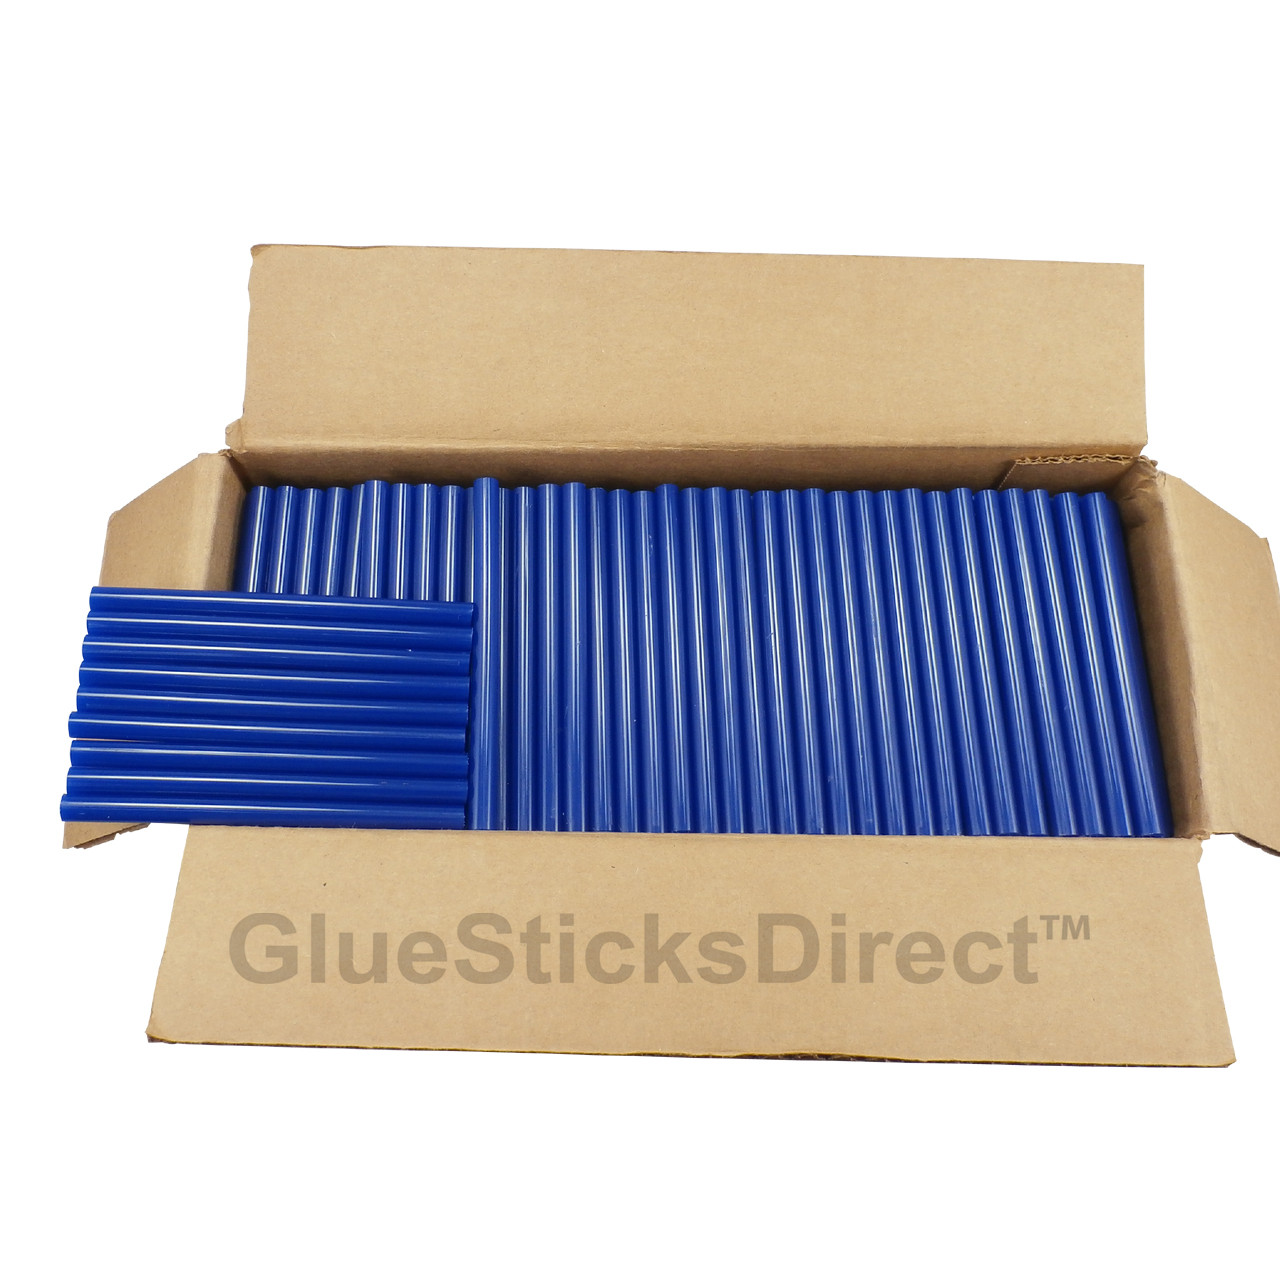 GlueSticksDirect Blue Colored Glue Sticks 5/16" X 4" 5 lbs